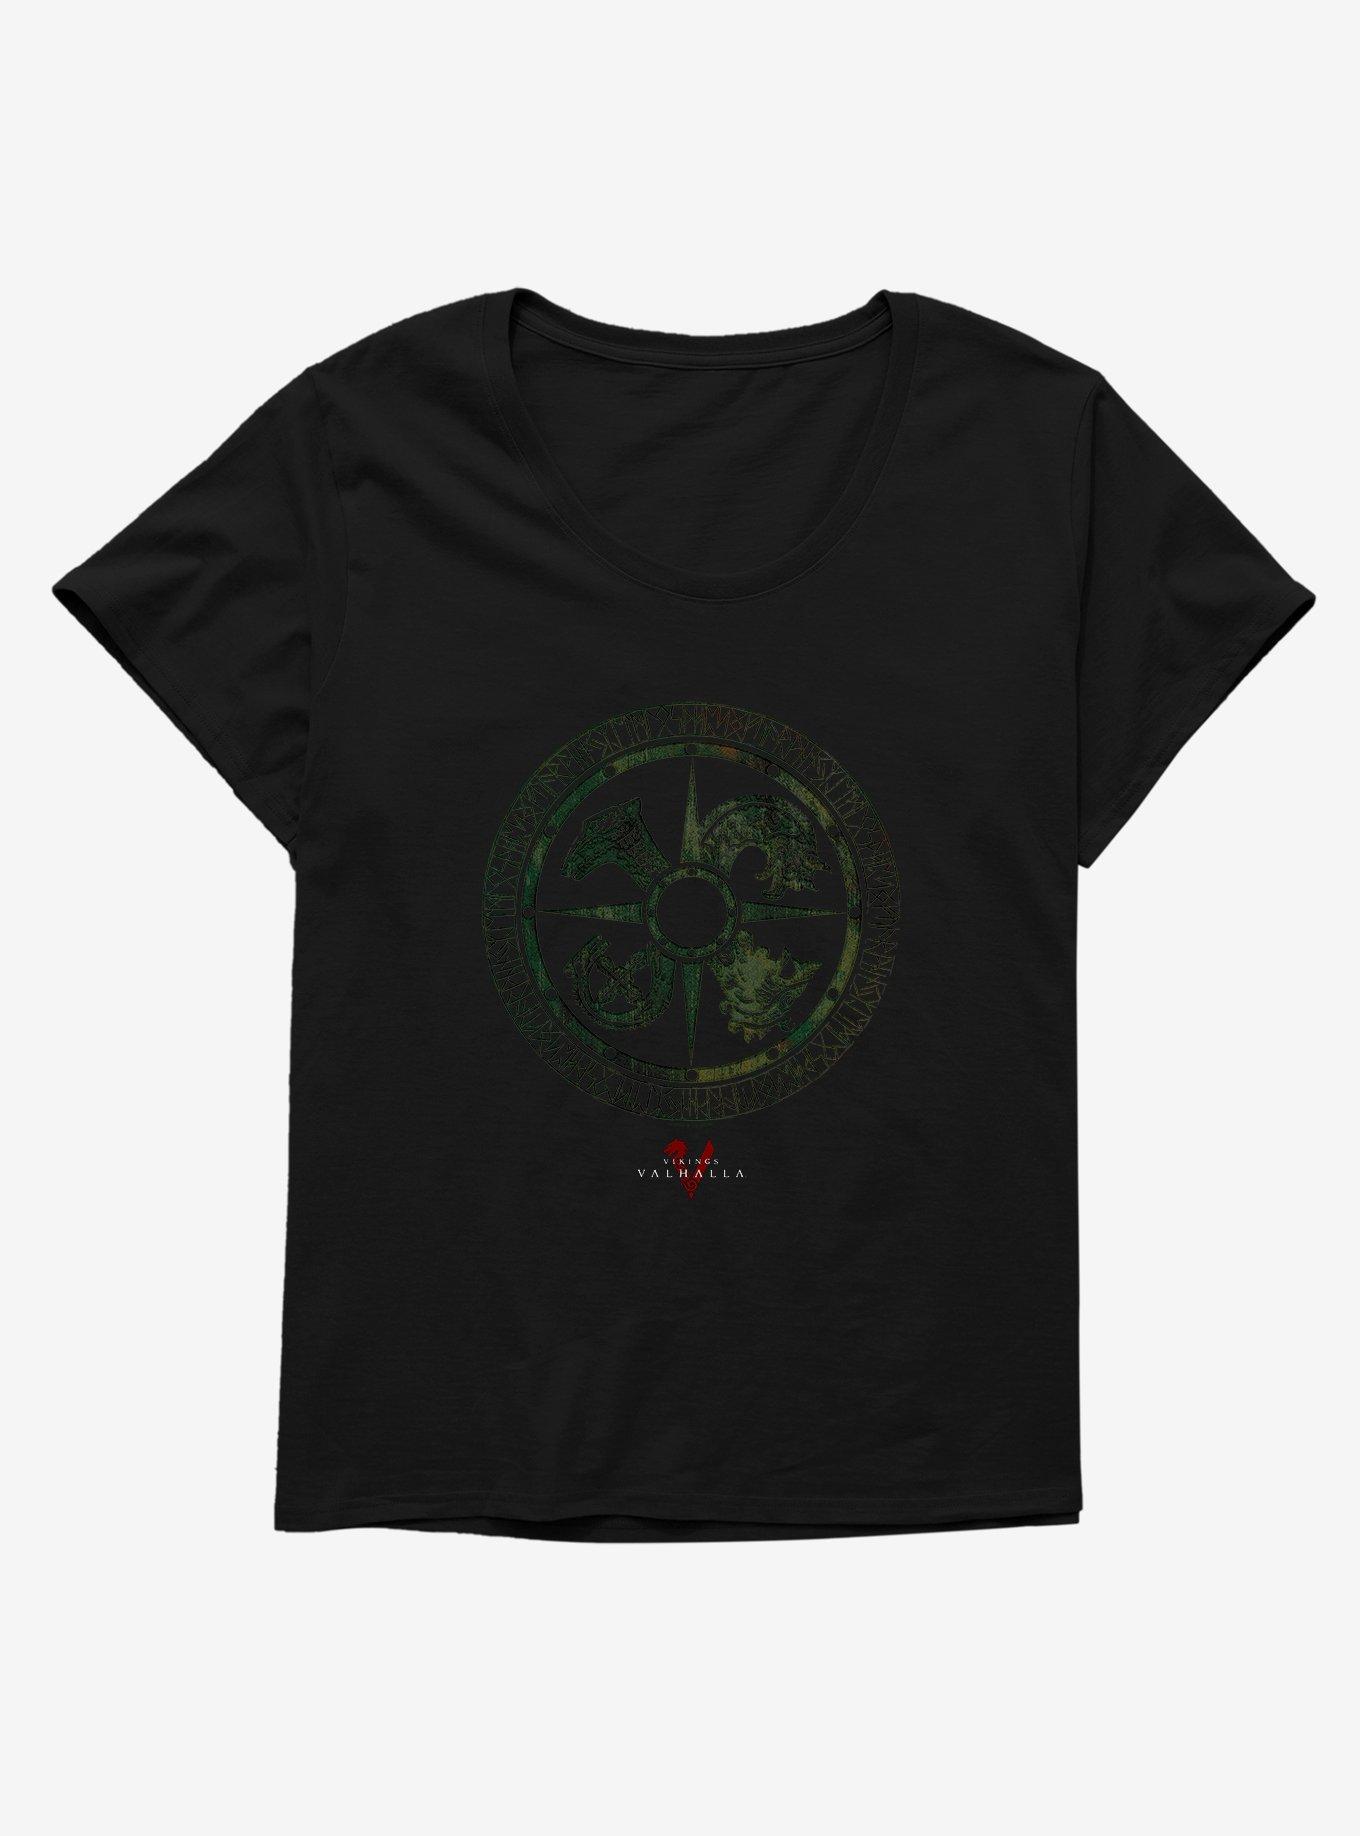 Vikings: Valhalla Emblem Girls T-Shirt Plus